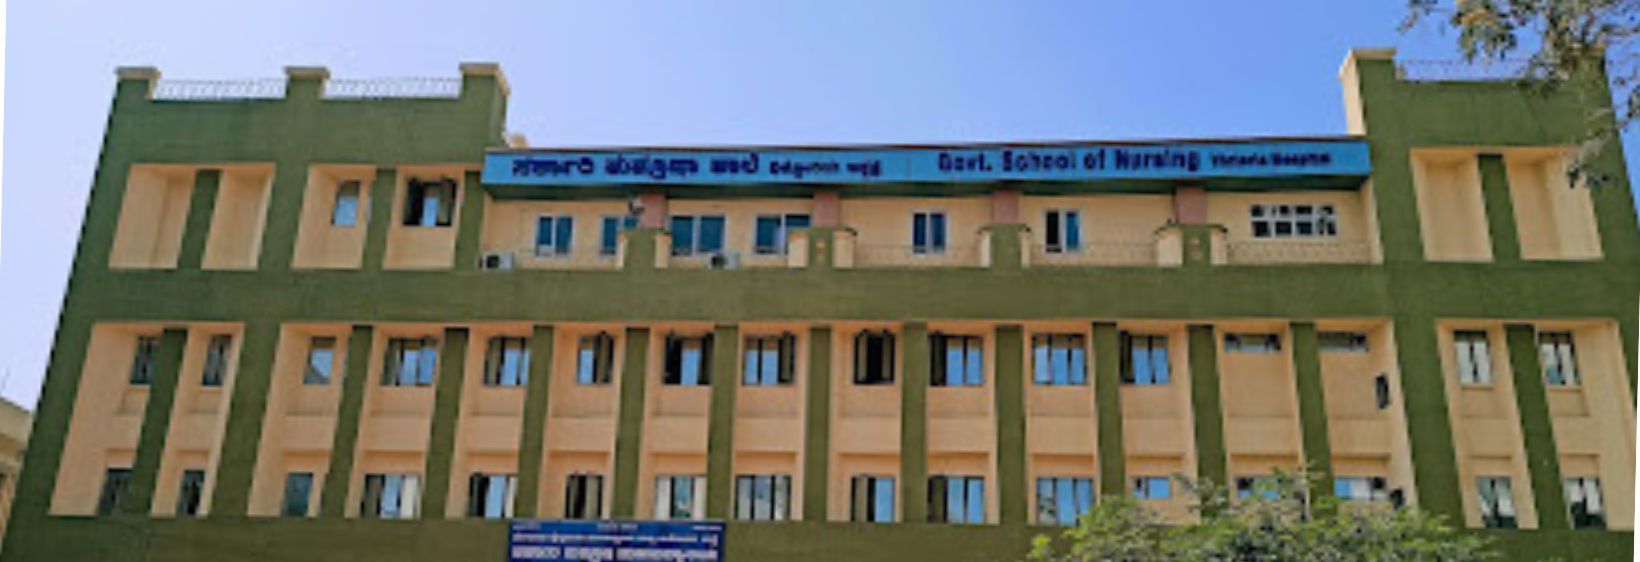 Government College of Nursing - Bangalore